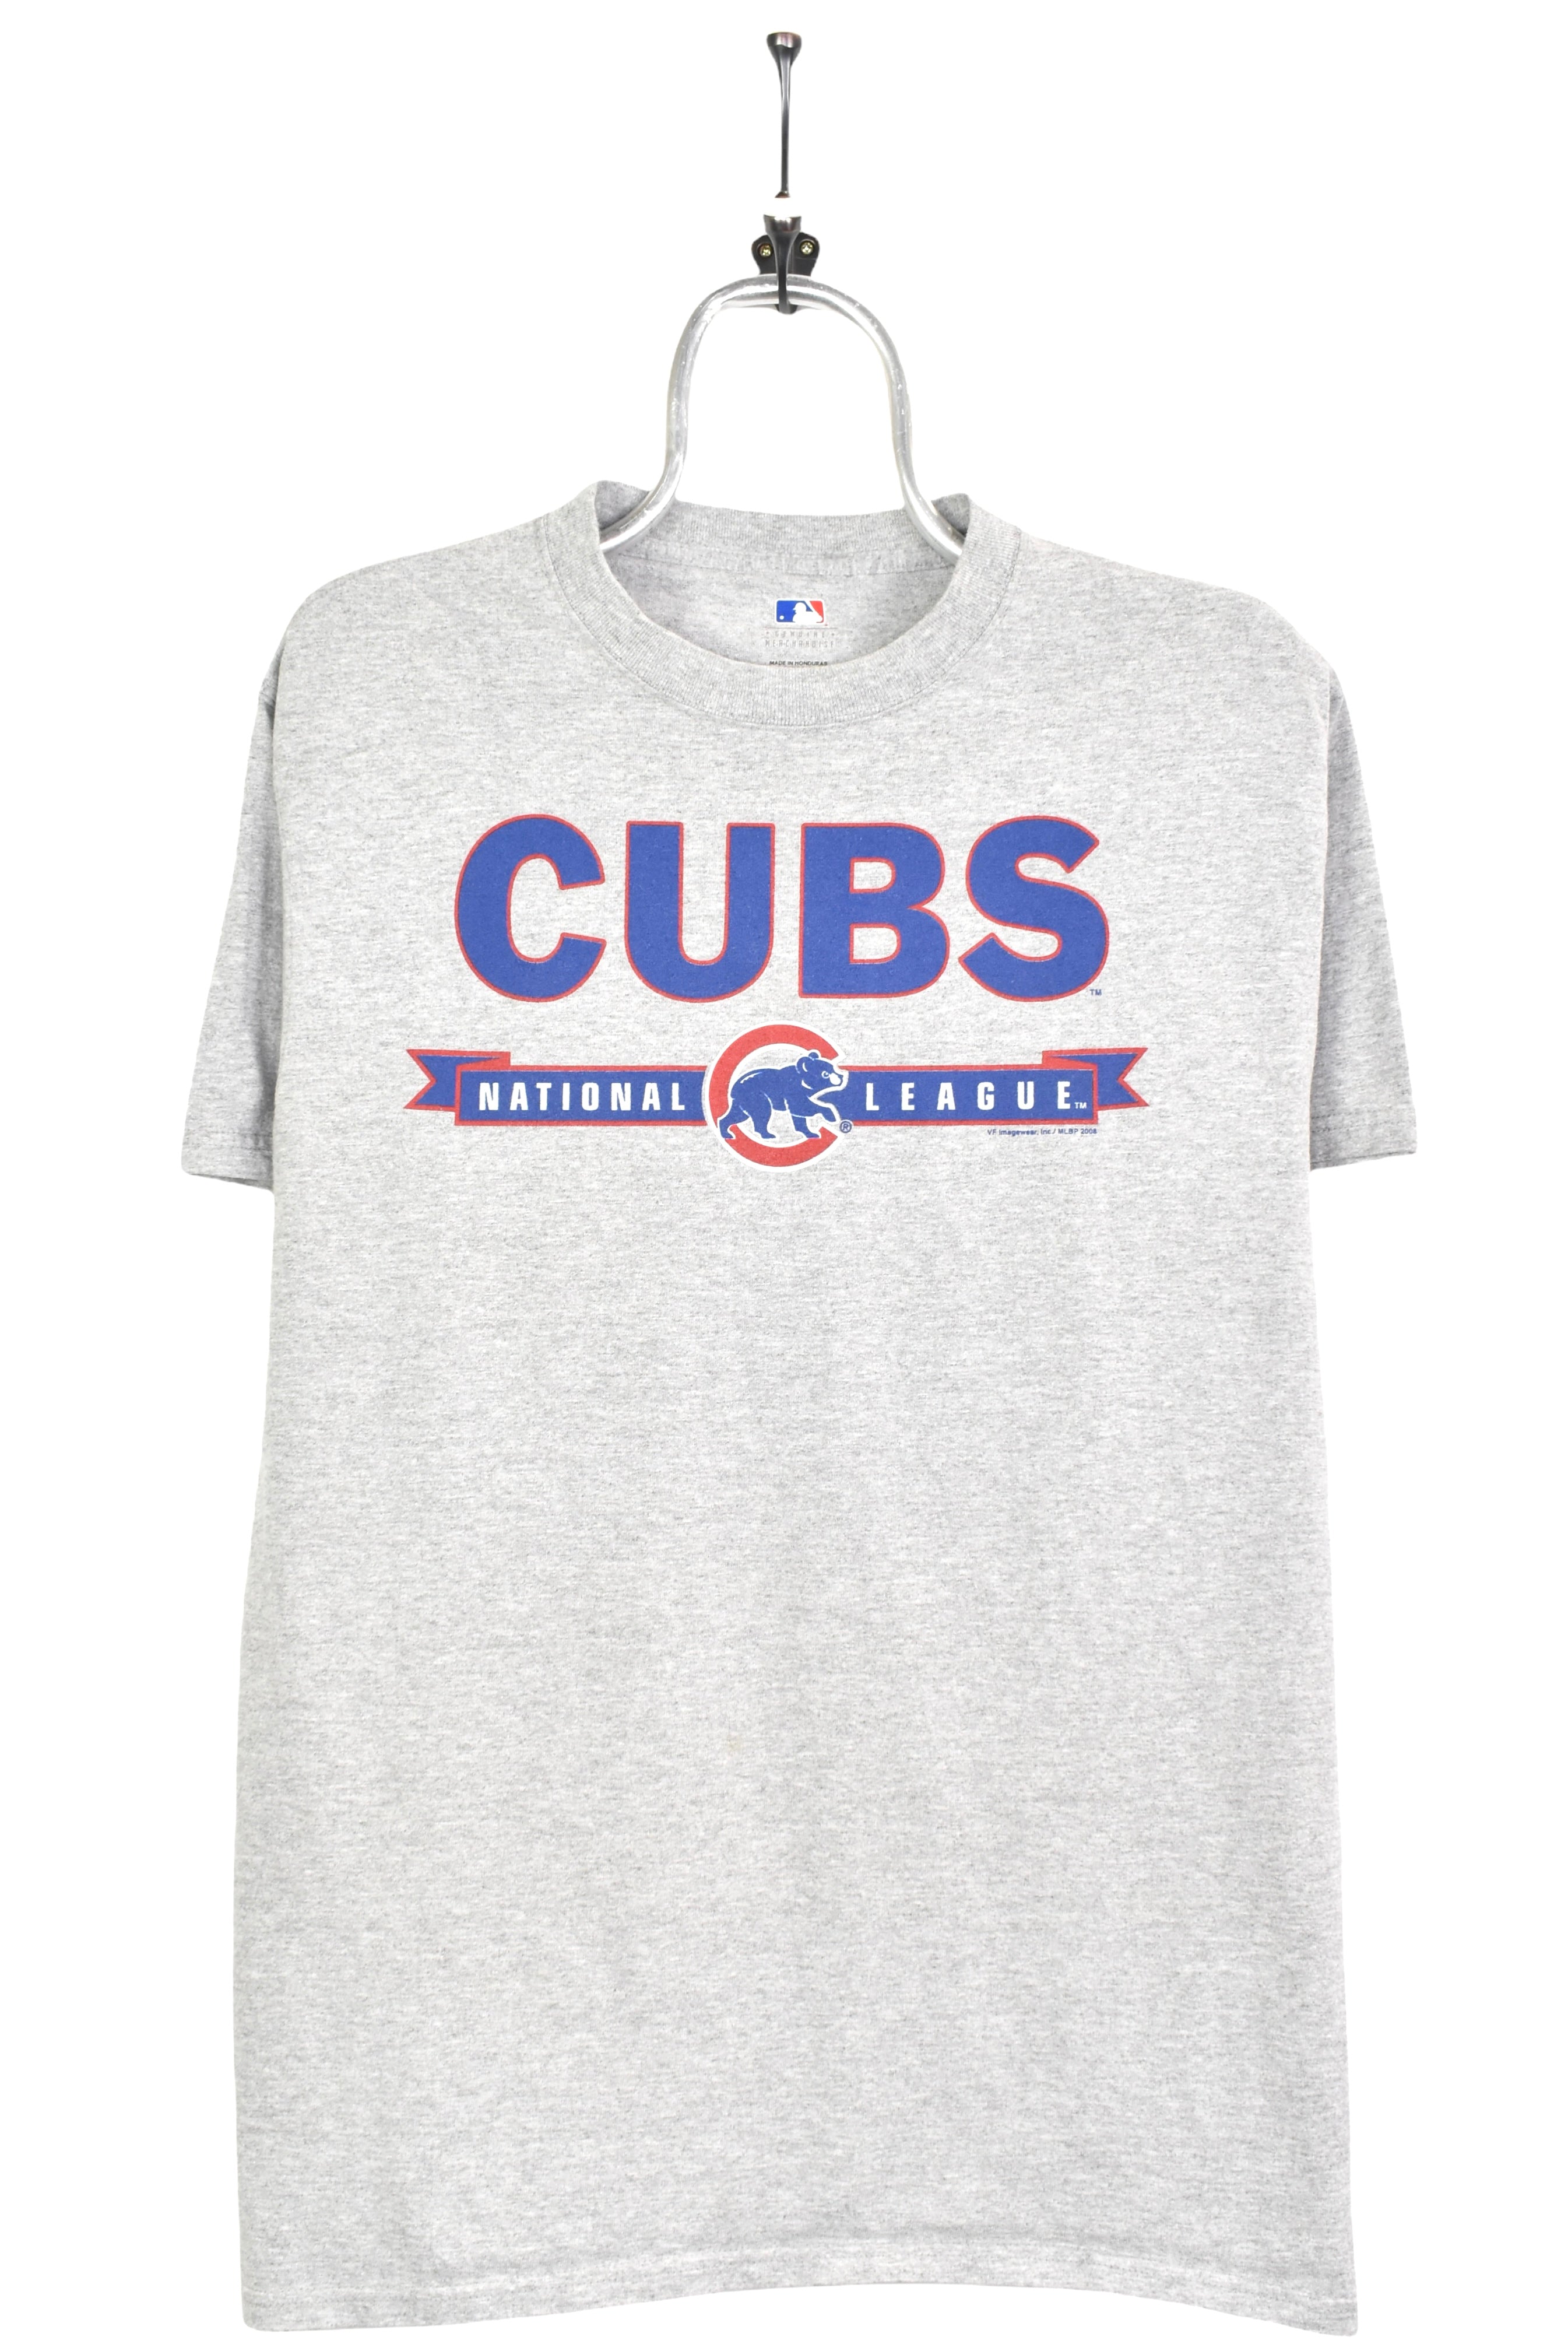 Modern Chicago Cubs shirt, 2008 MLB grey graphic tee - AU M PRO SPORT